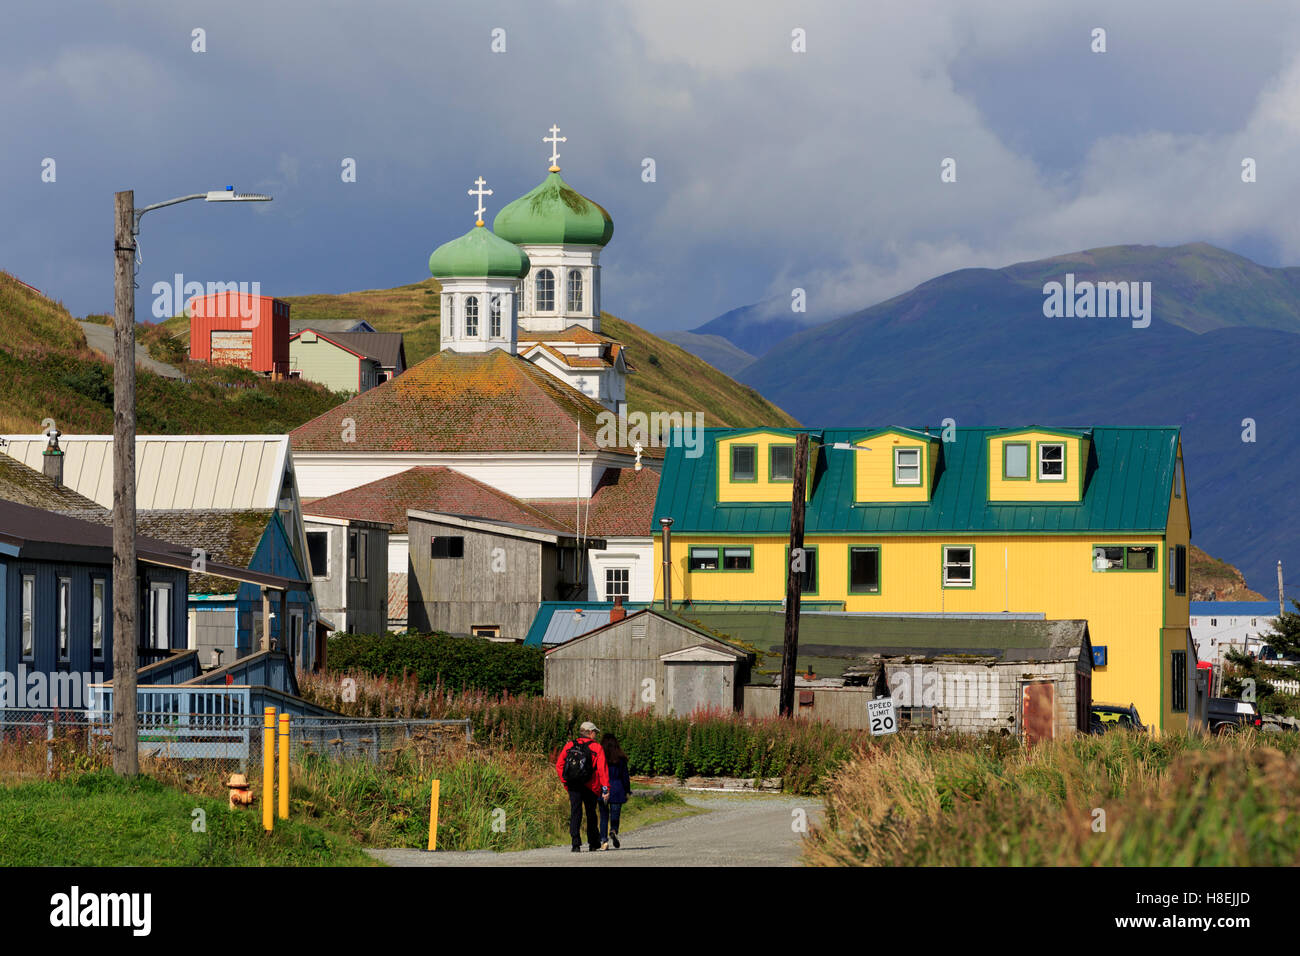 Russian Orthodox Church, Unalaska Island, Aleutian Islands, Alaska, United States of America, North America Stock Photo